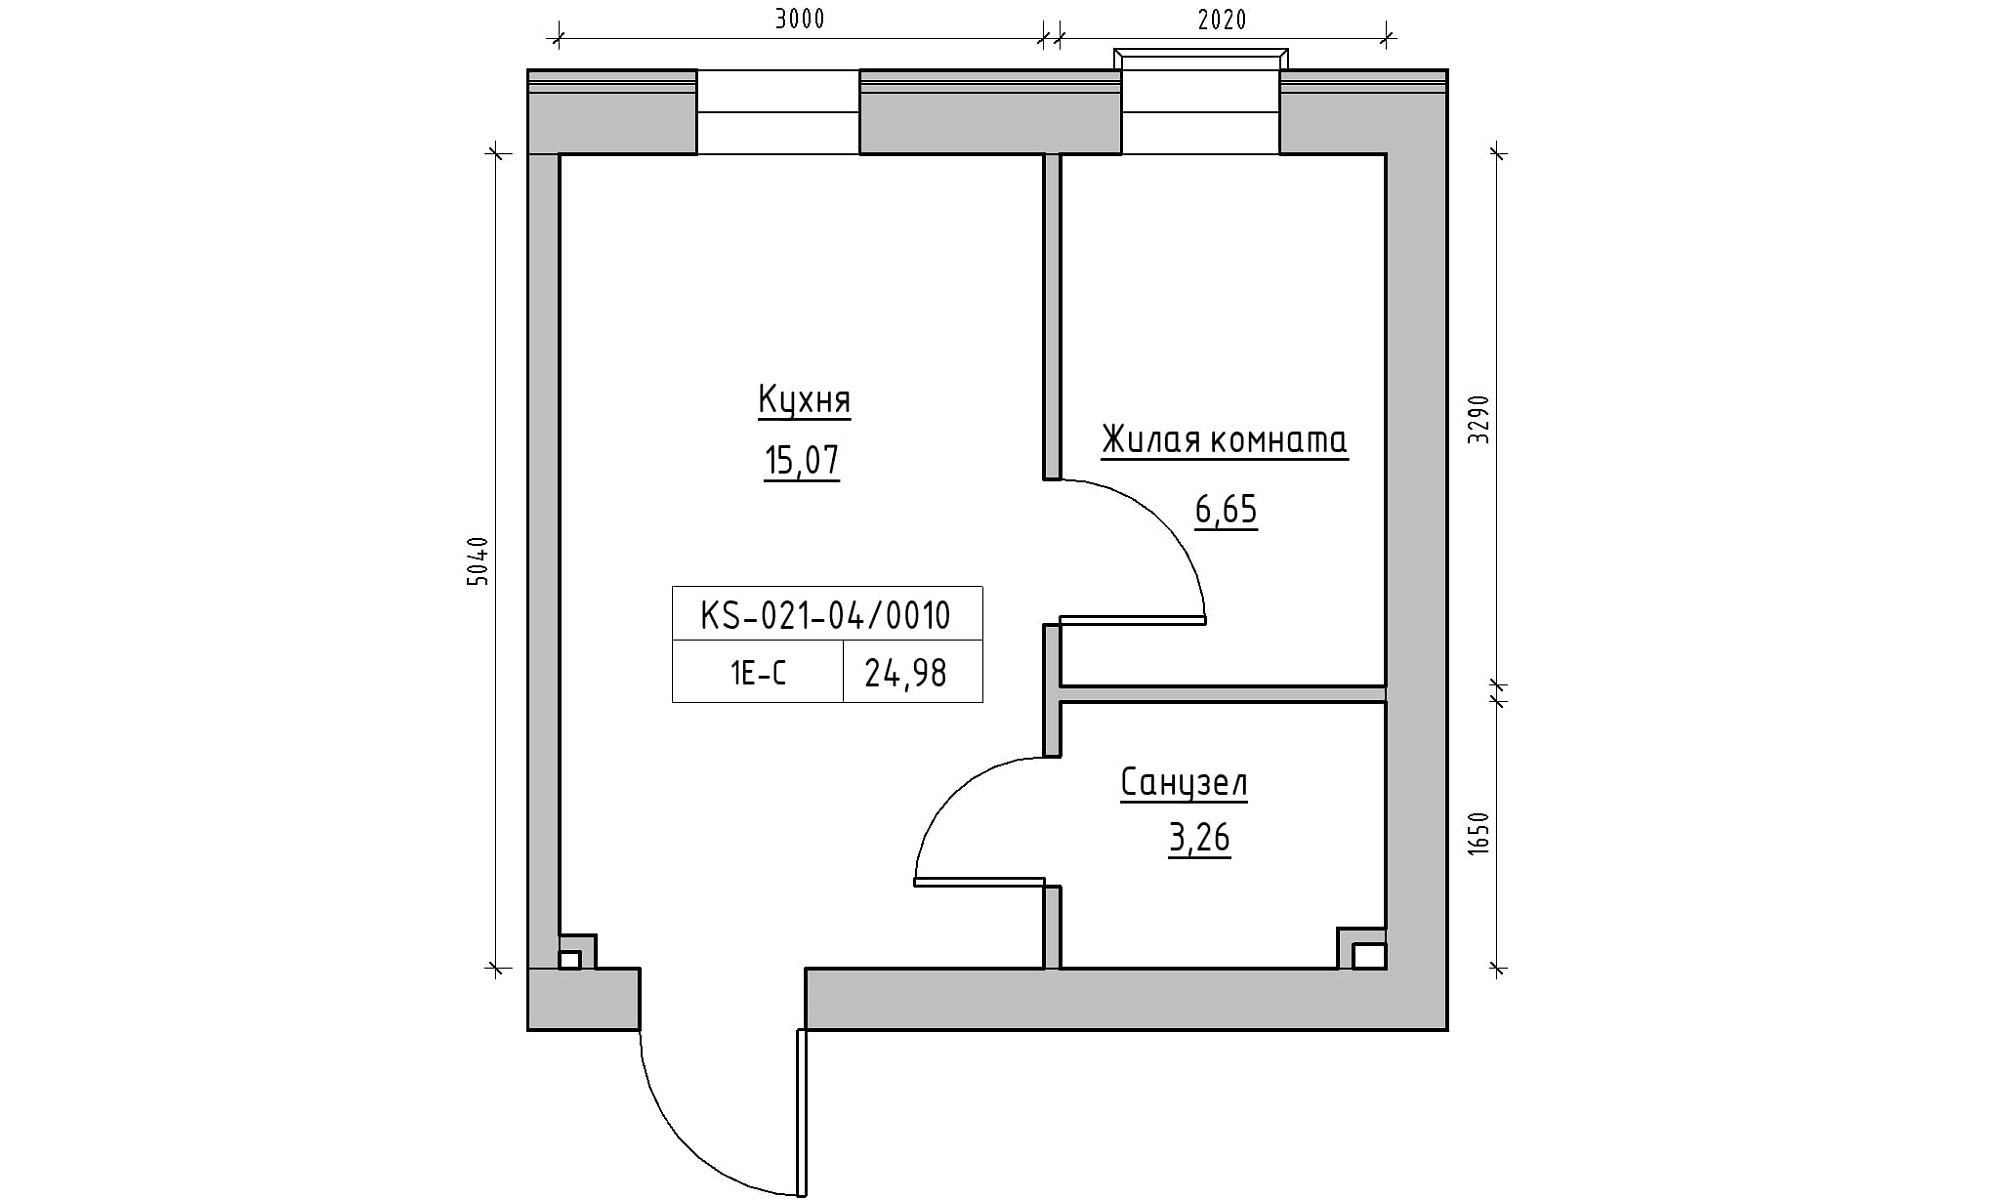 Planning 1-rm flats area 24.98m2, KS-021-04/0010.